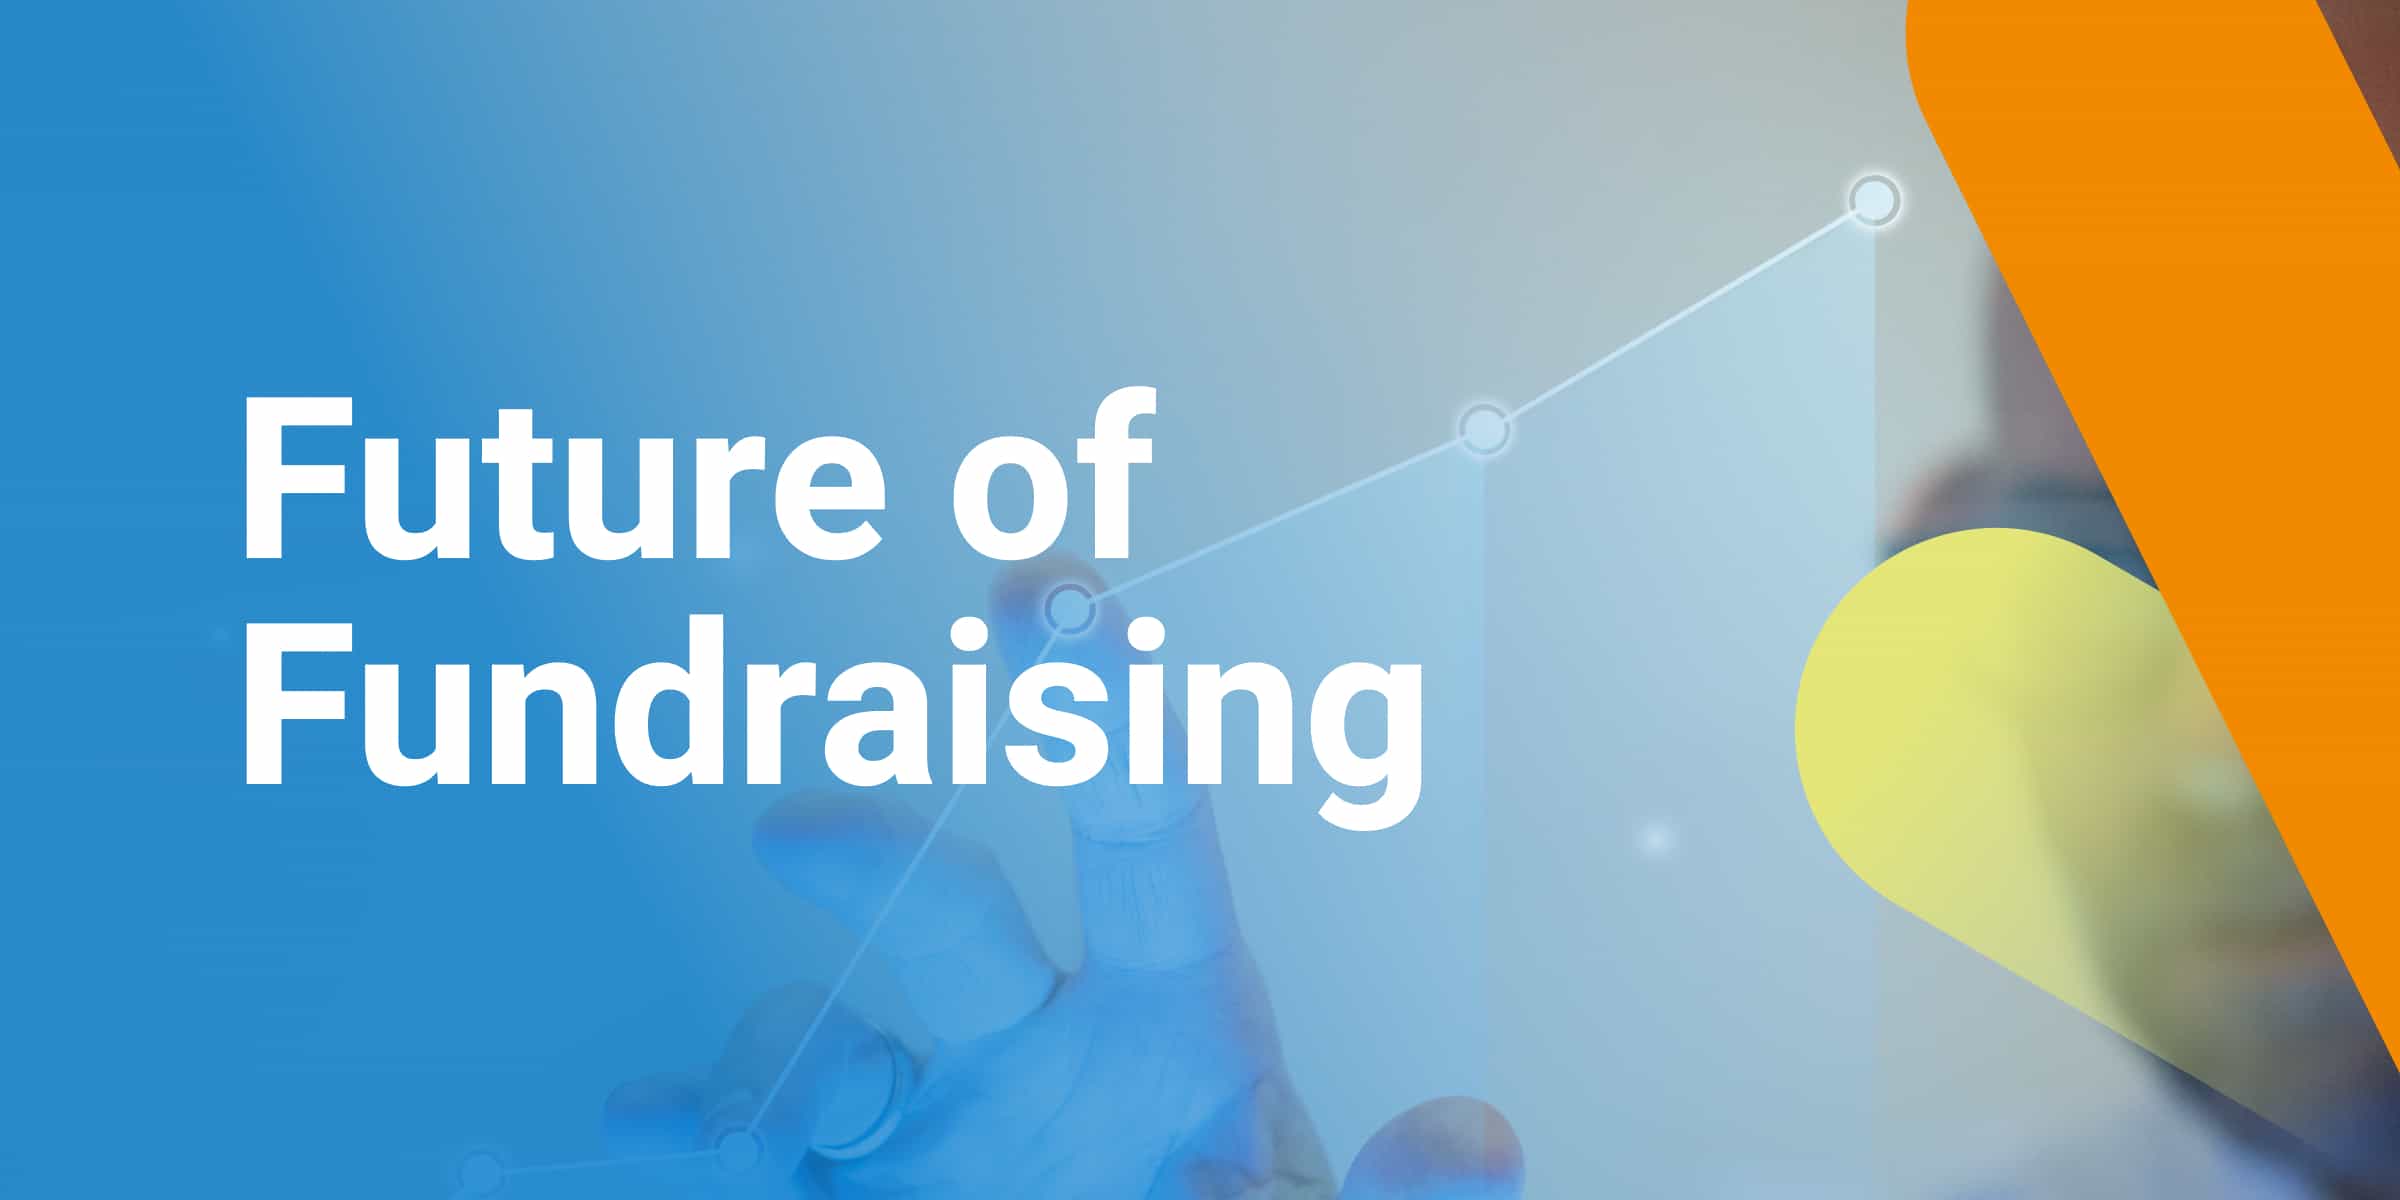 Future of Fundraising Webinar title card.